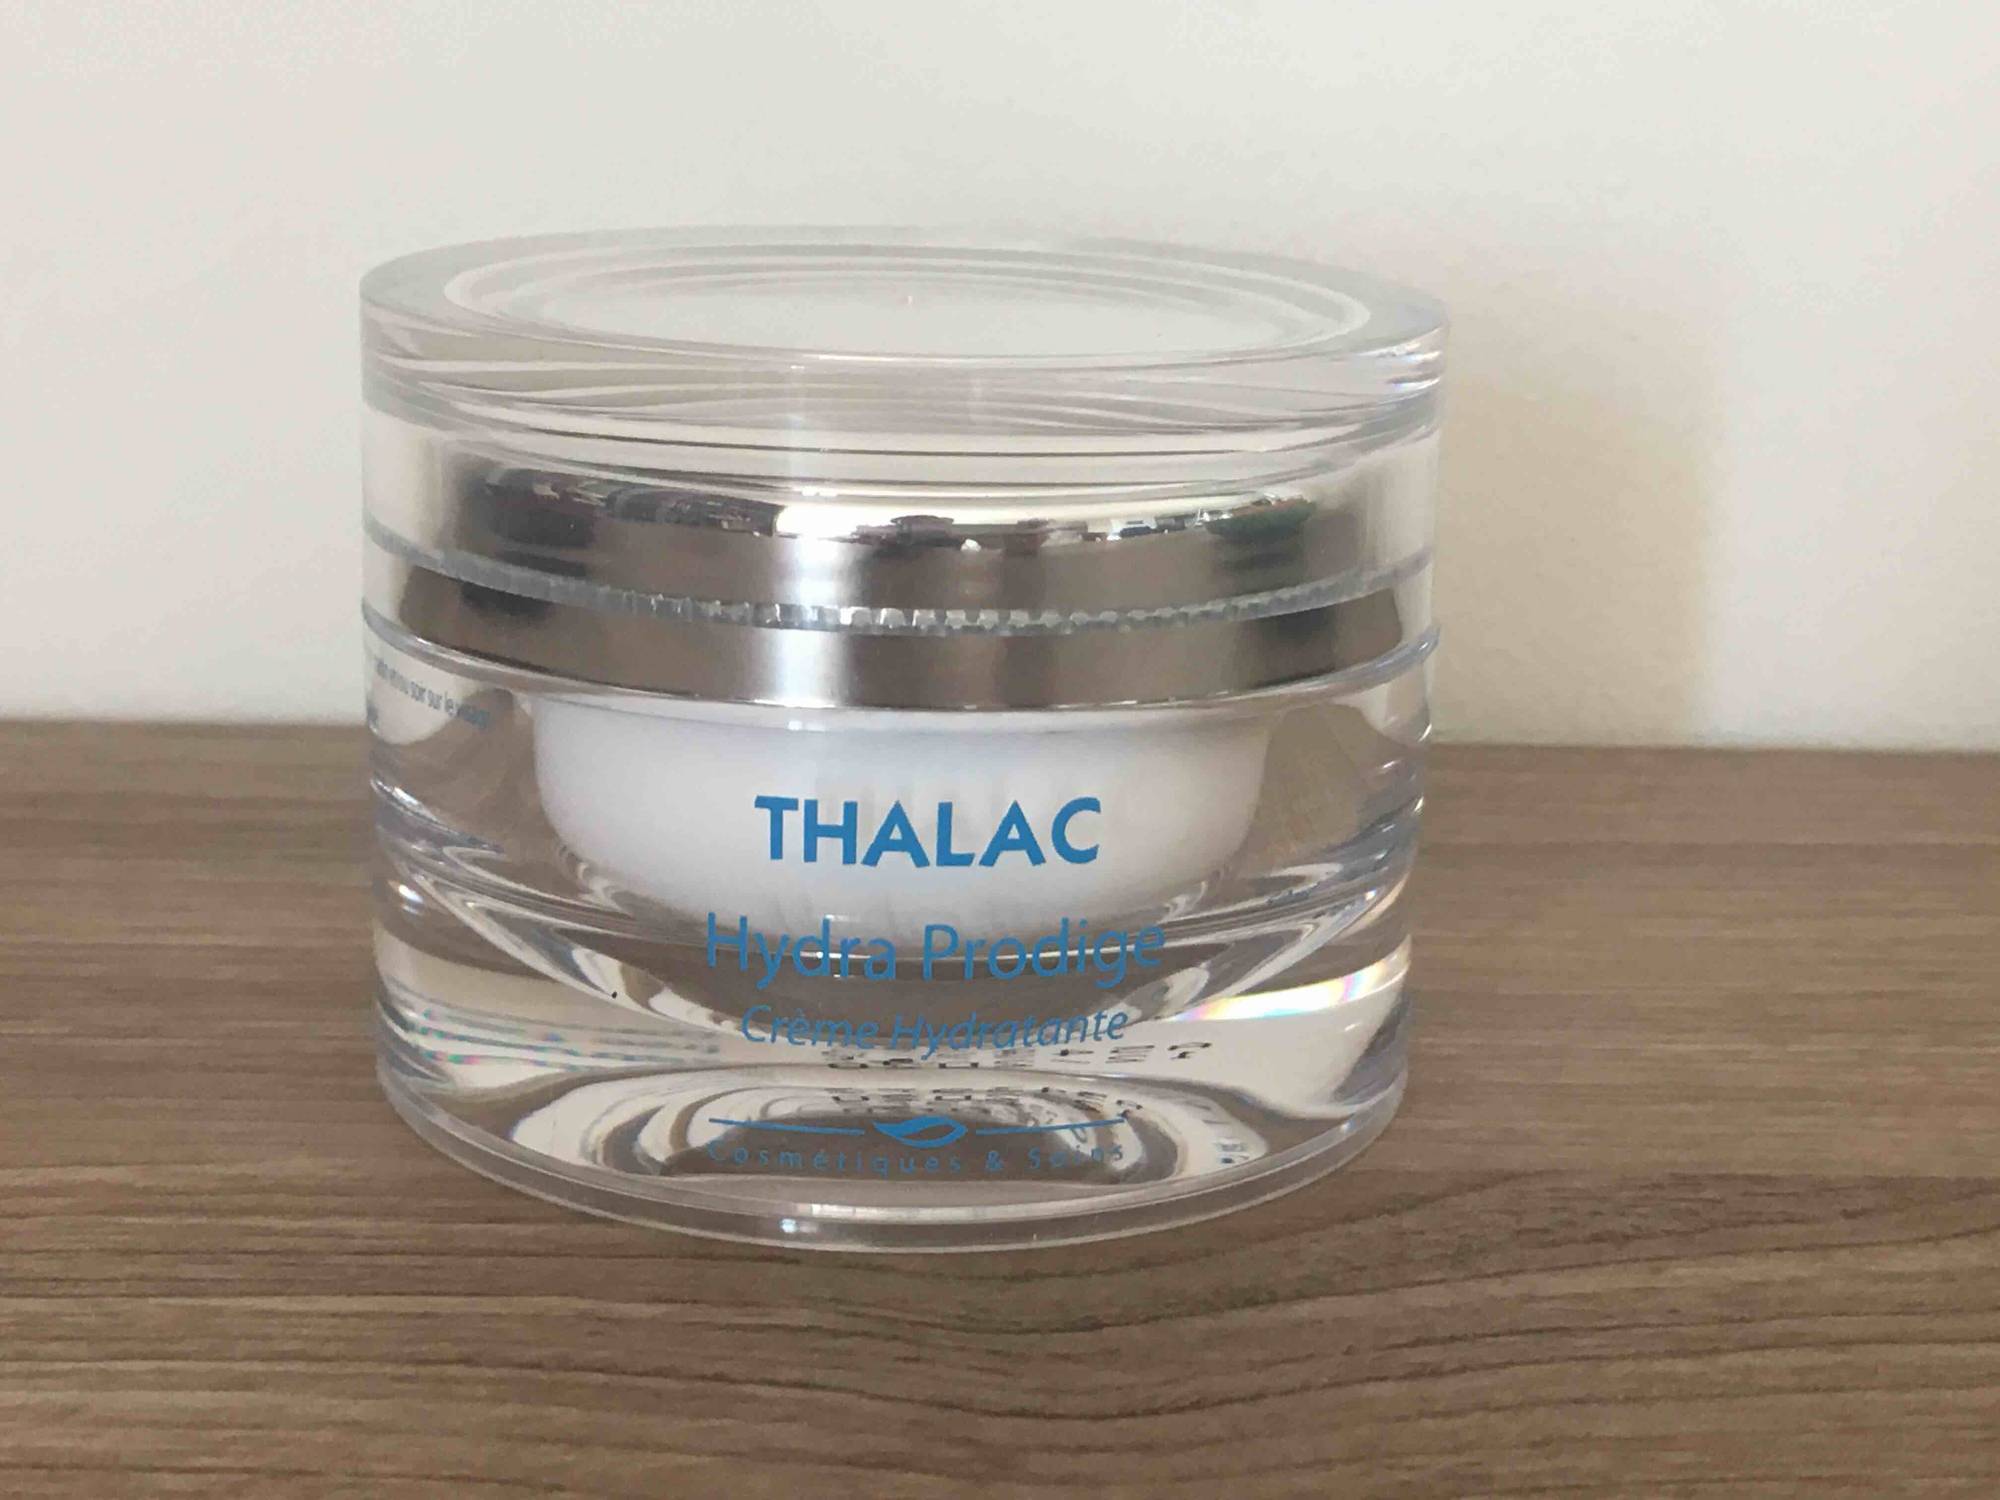 THALAC - Hydra prodige - Crème hydratante